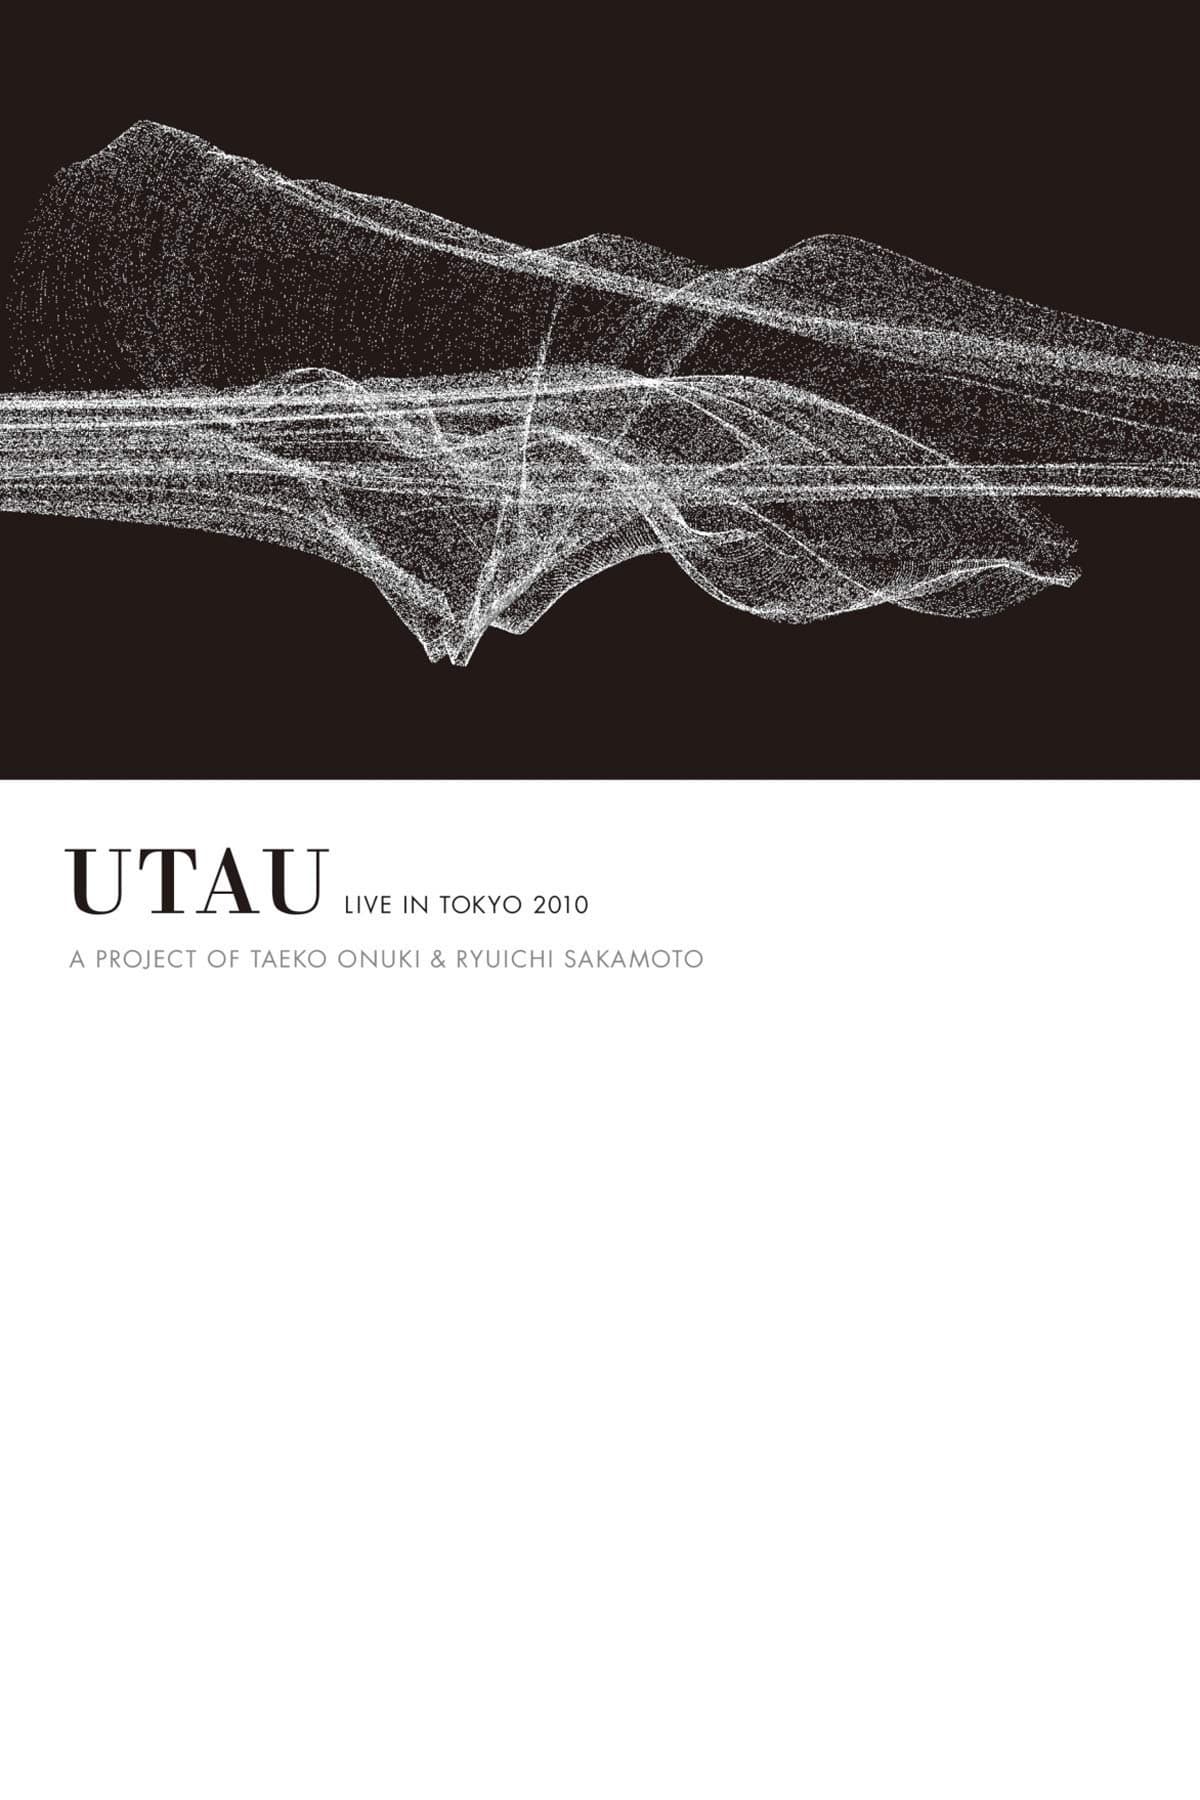 Utau Live in Tokyo 2010 - A Project of Taeko Onuki & Ryuichi Sakamoto